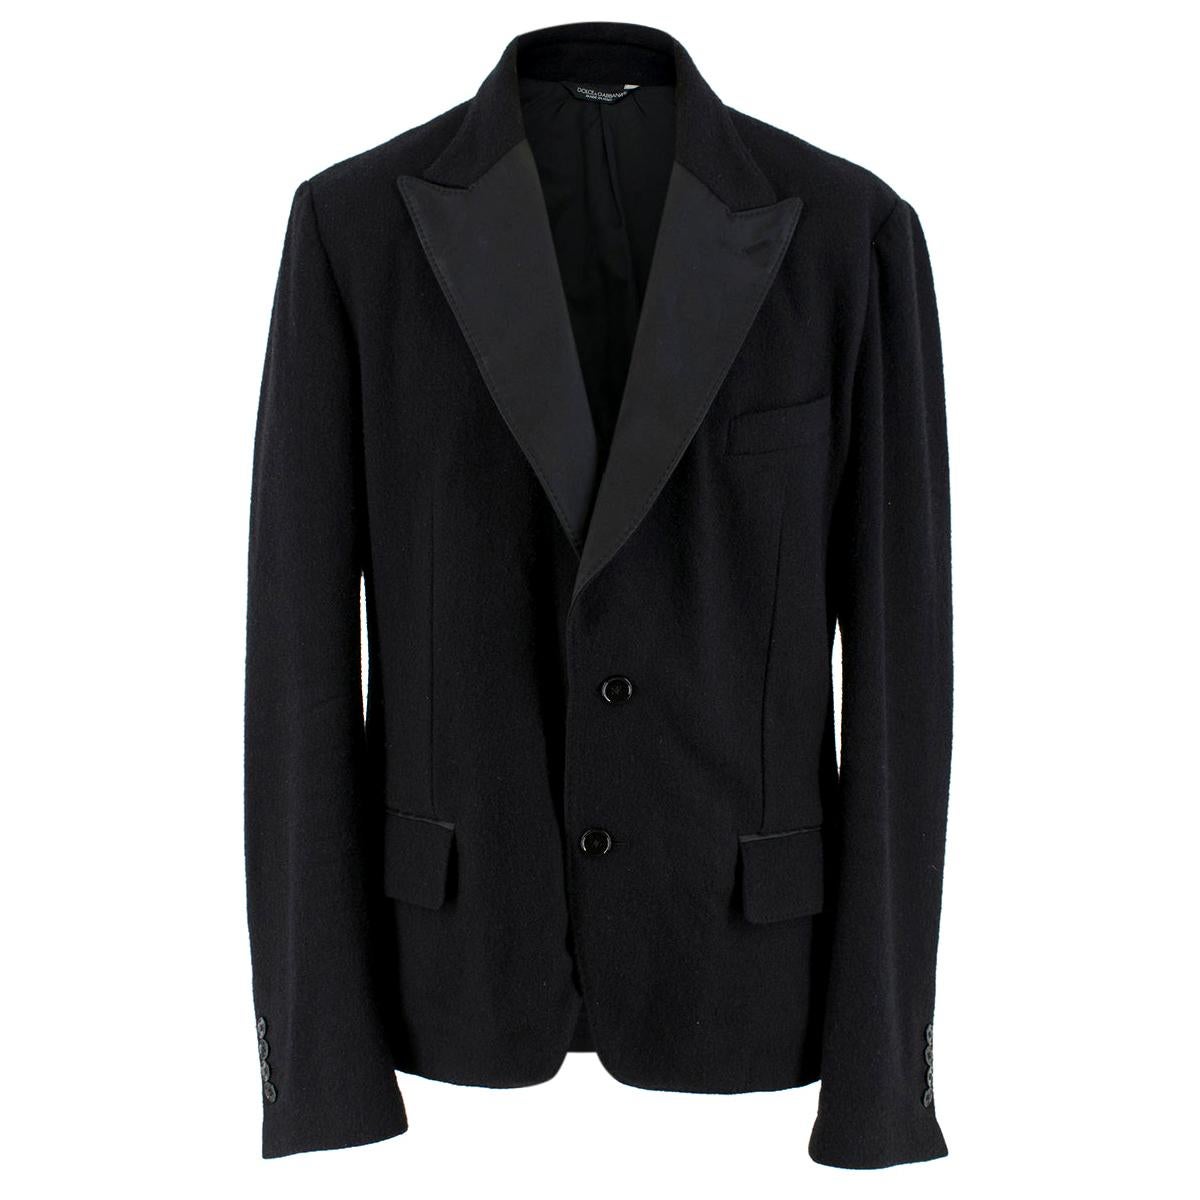 Dolce & Gabbana Men's Black Wool-blend Tailored Jacket estimated SIZE S